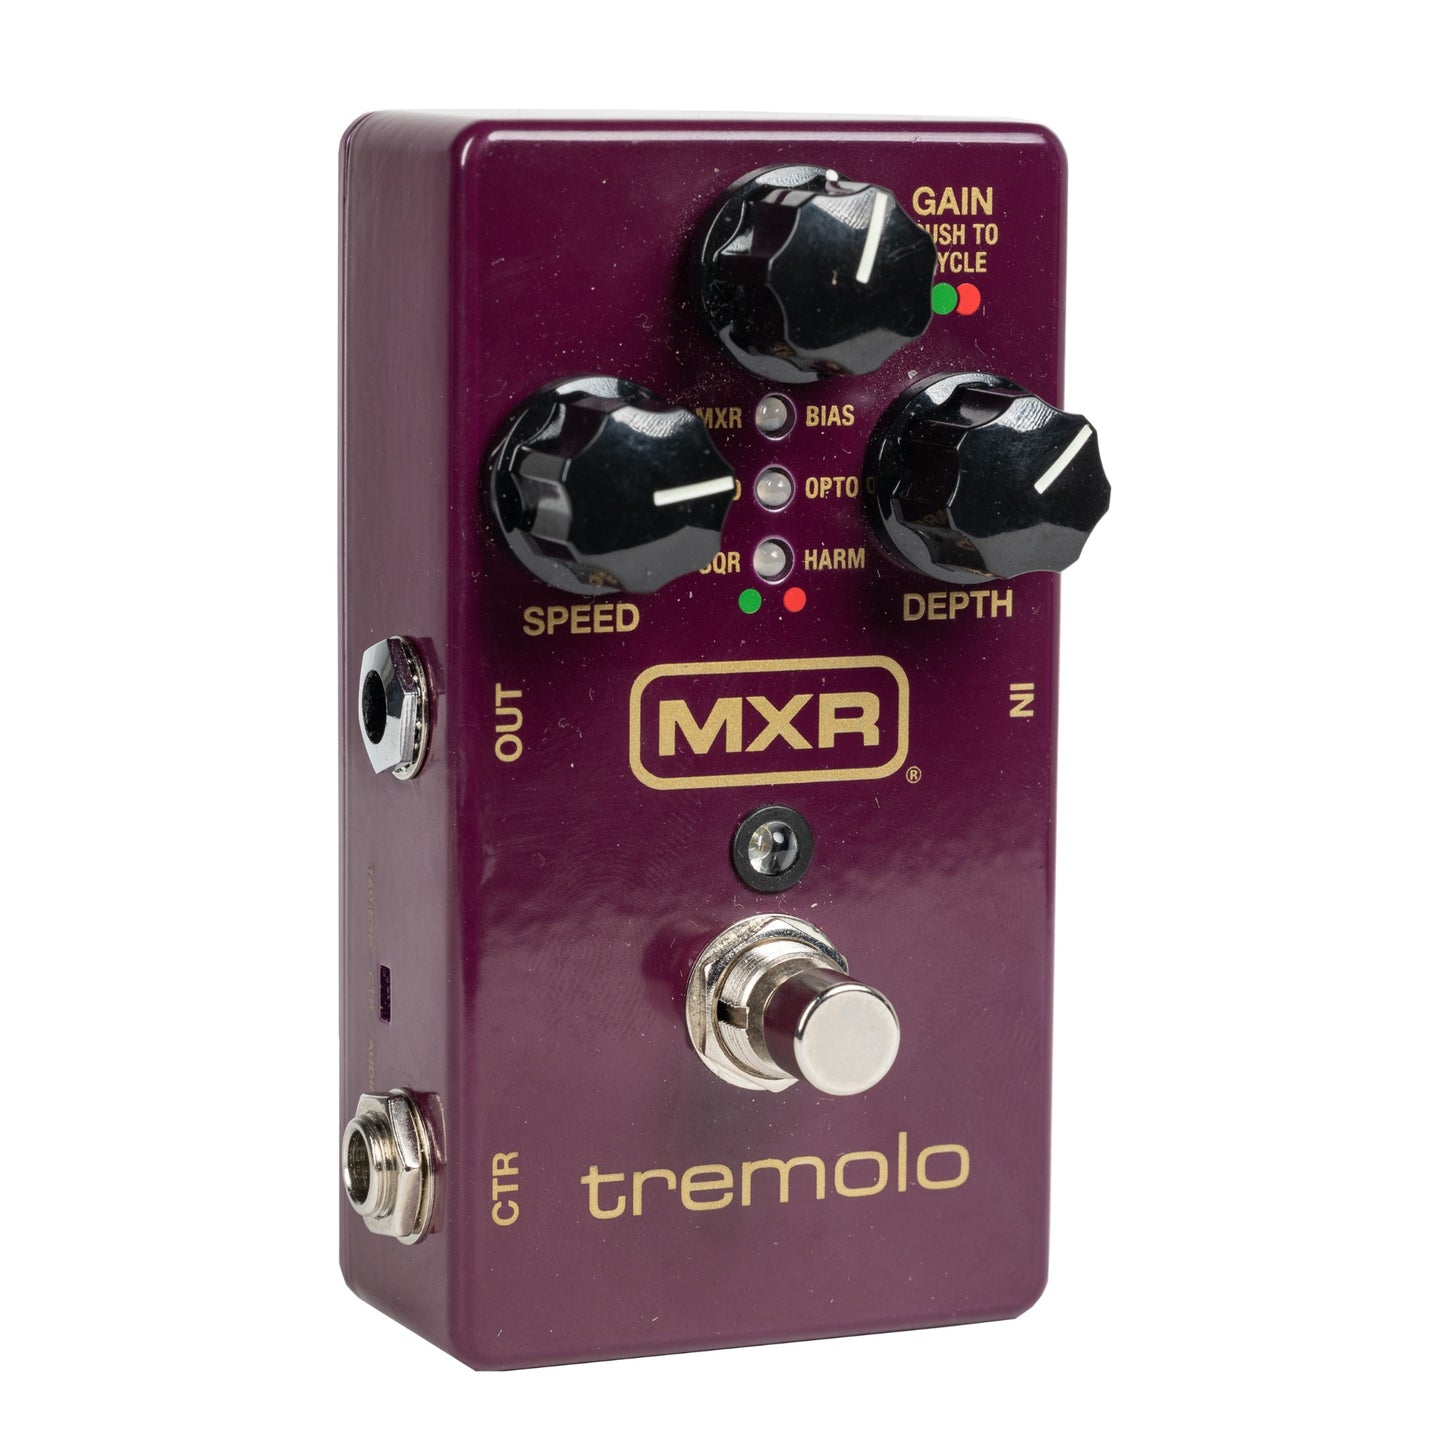 MXR Tremolo M305 Effects Pedal